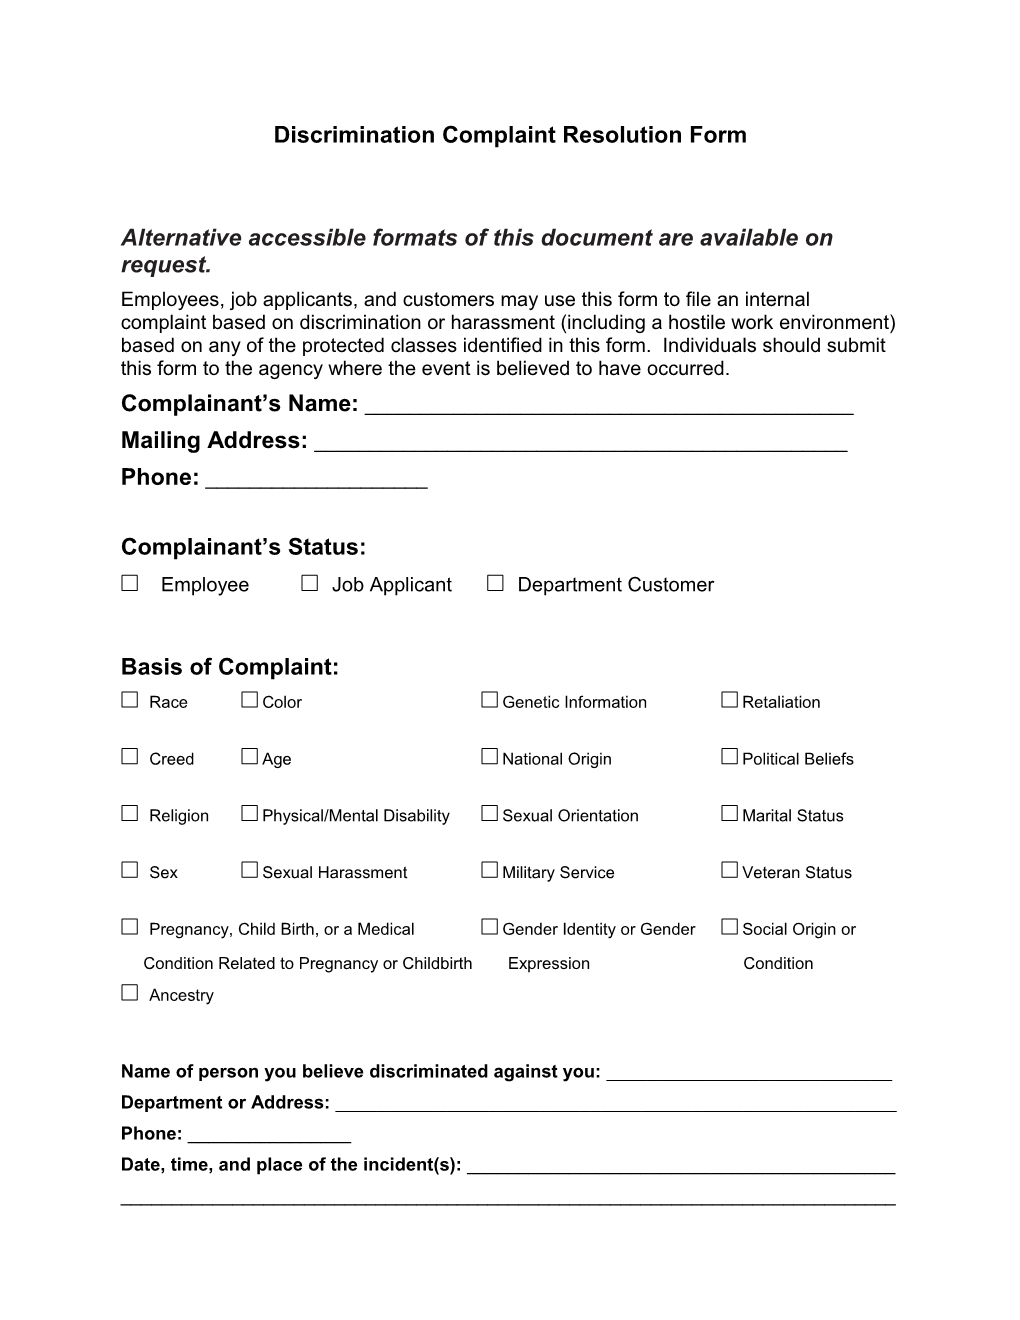 Discrimination Complaint Resolution Form